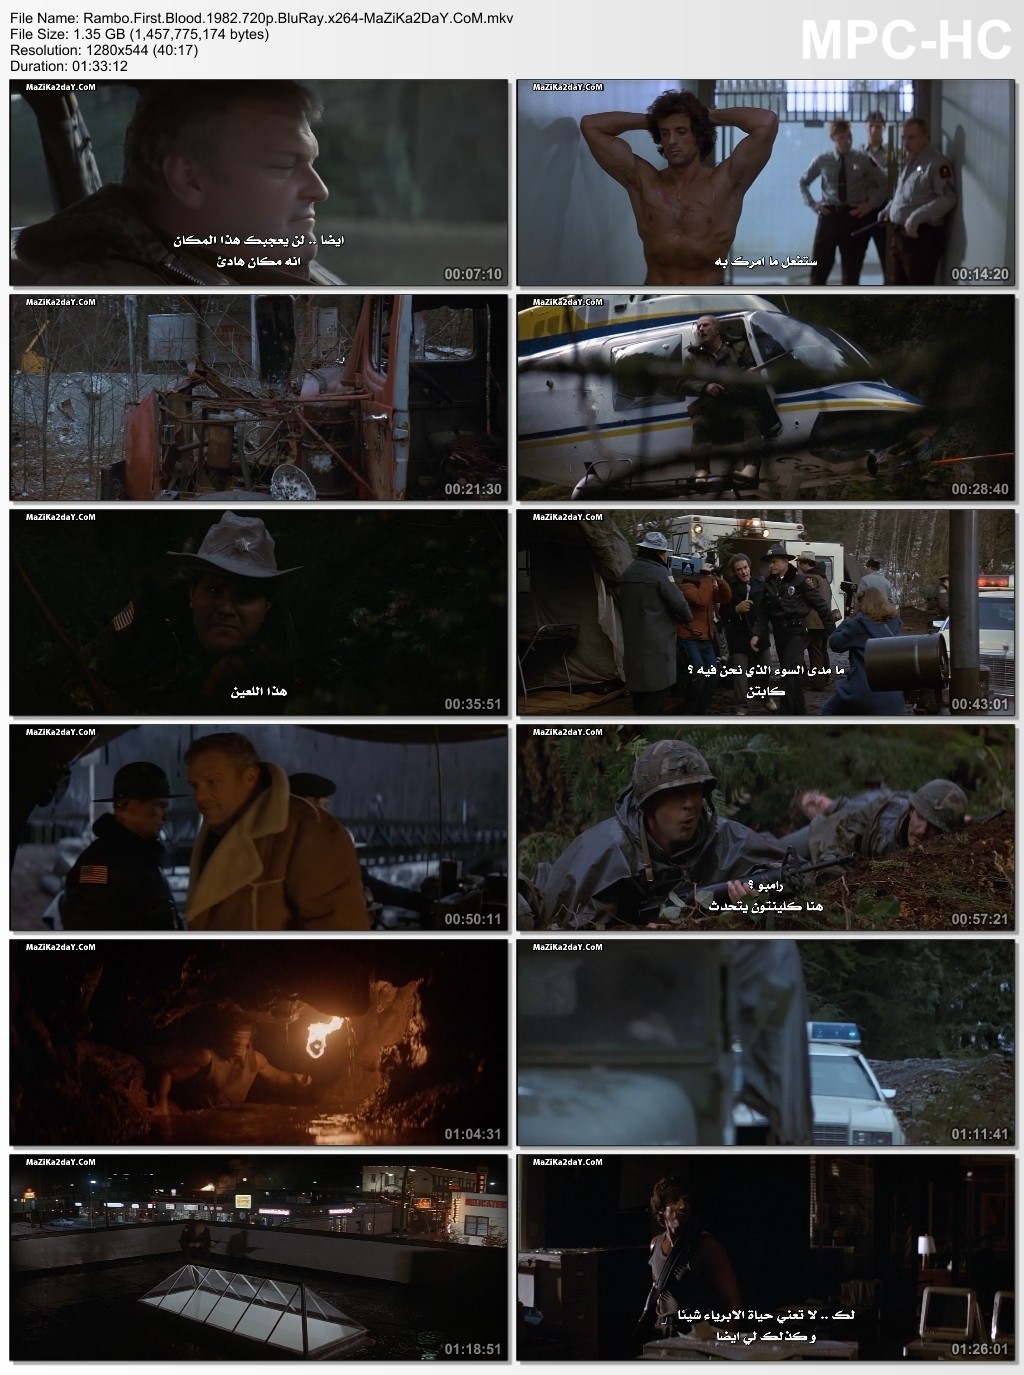 Rambo.First.Blood.1982.720p.BluRay.x264-MaZiKa2DaY.CoM.mkv_thumbs